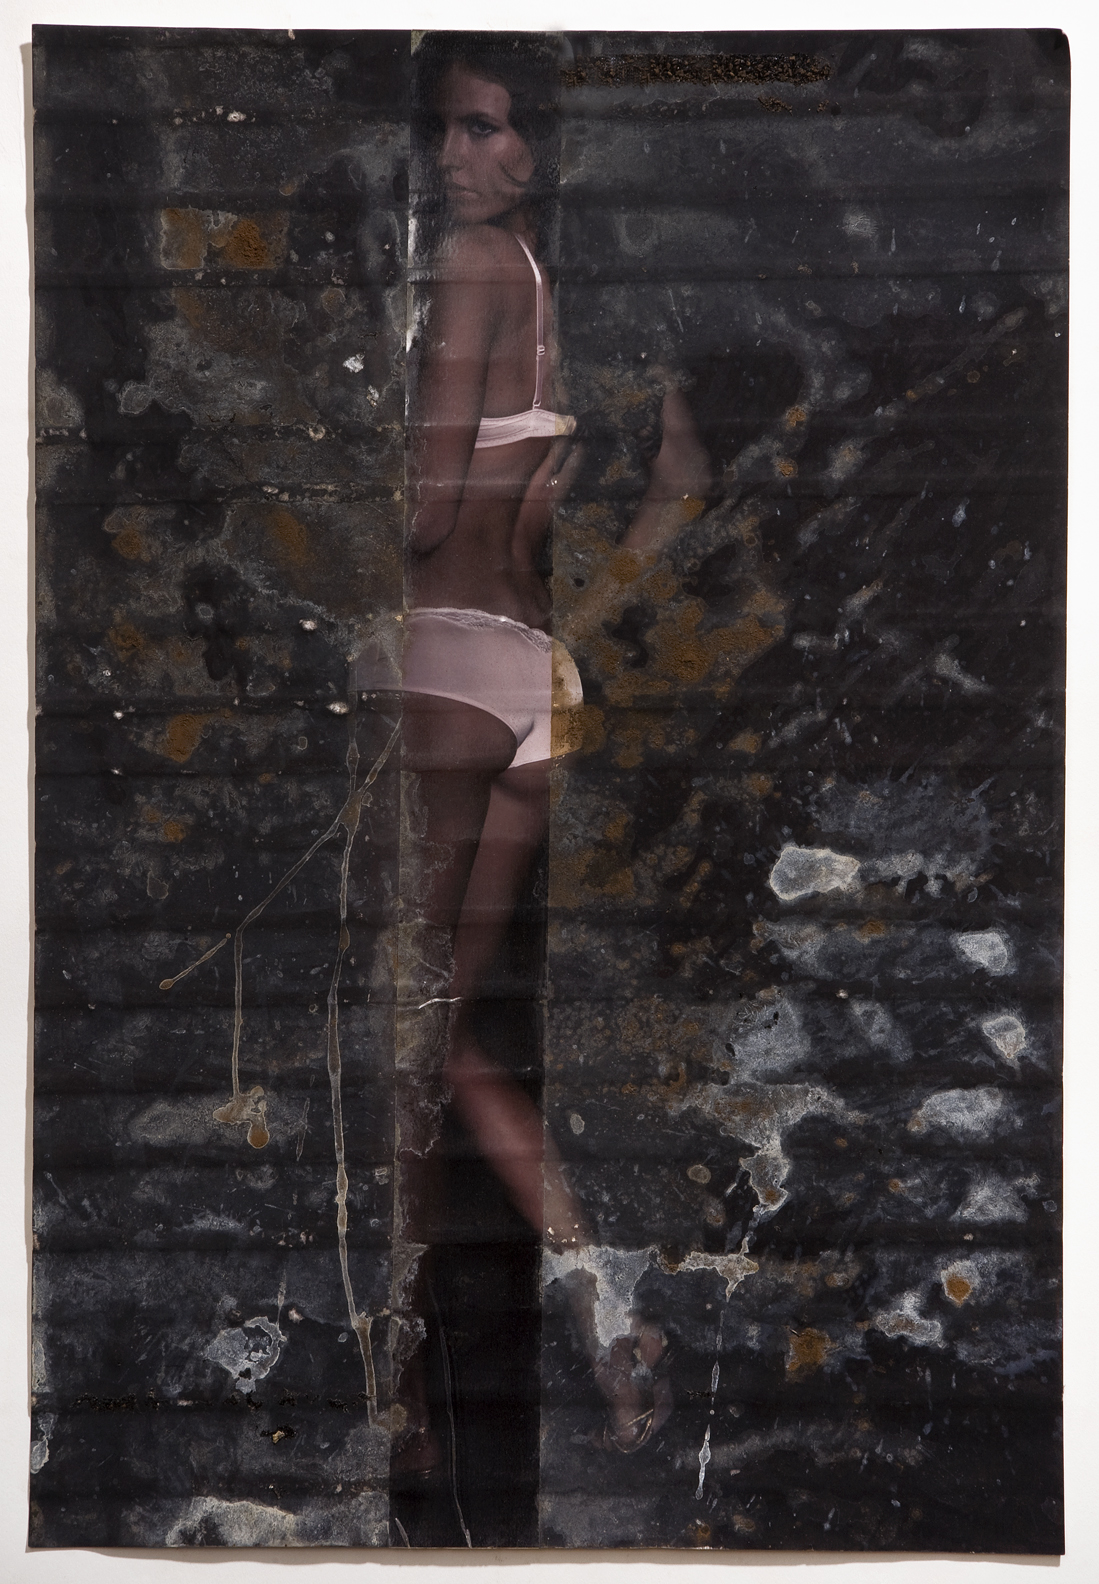 Marina, inkjet print, packing tape, coffee, coffee grounds, milk, 13"x19", 2010